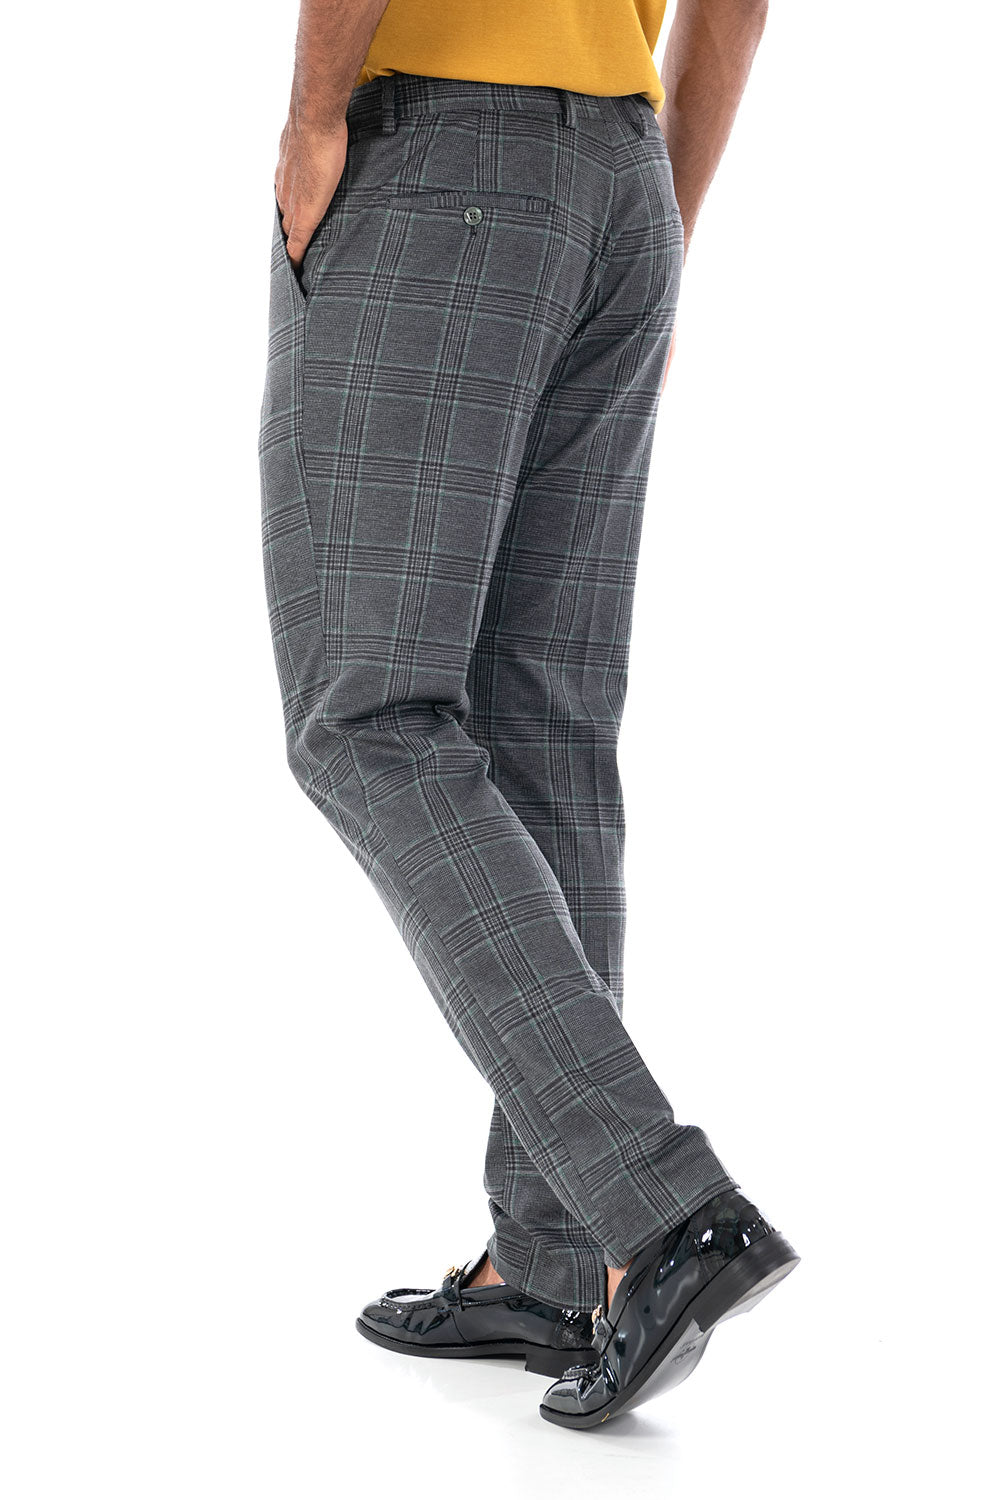 BARABAS men's checkered plaid black grey chino pants CP78